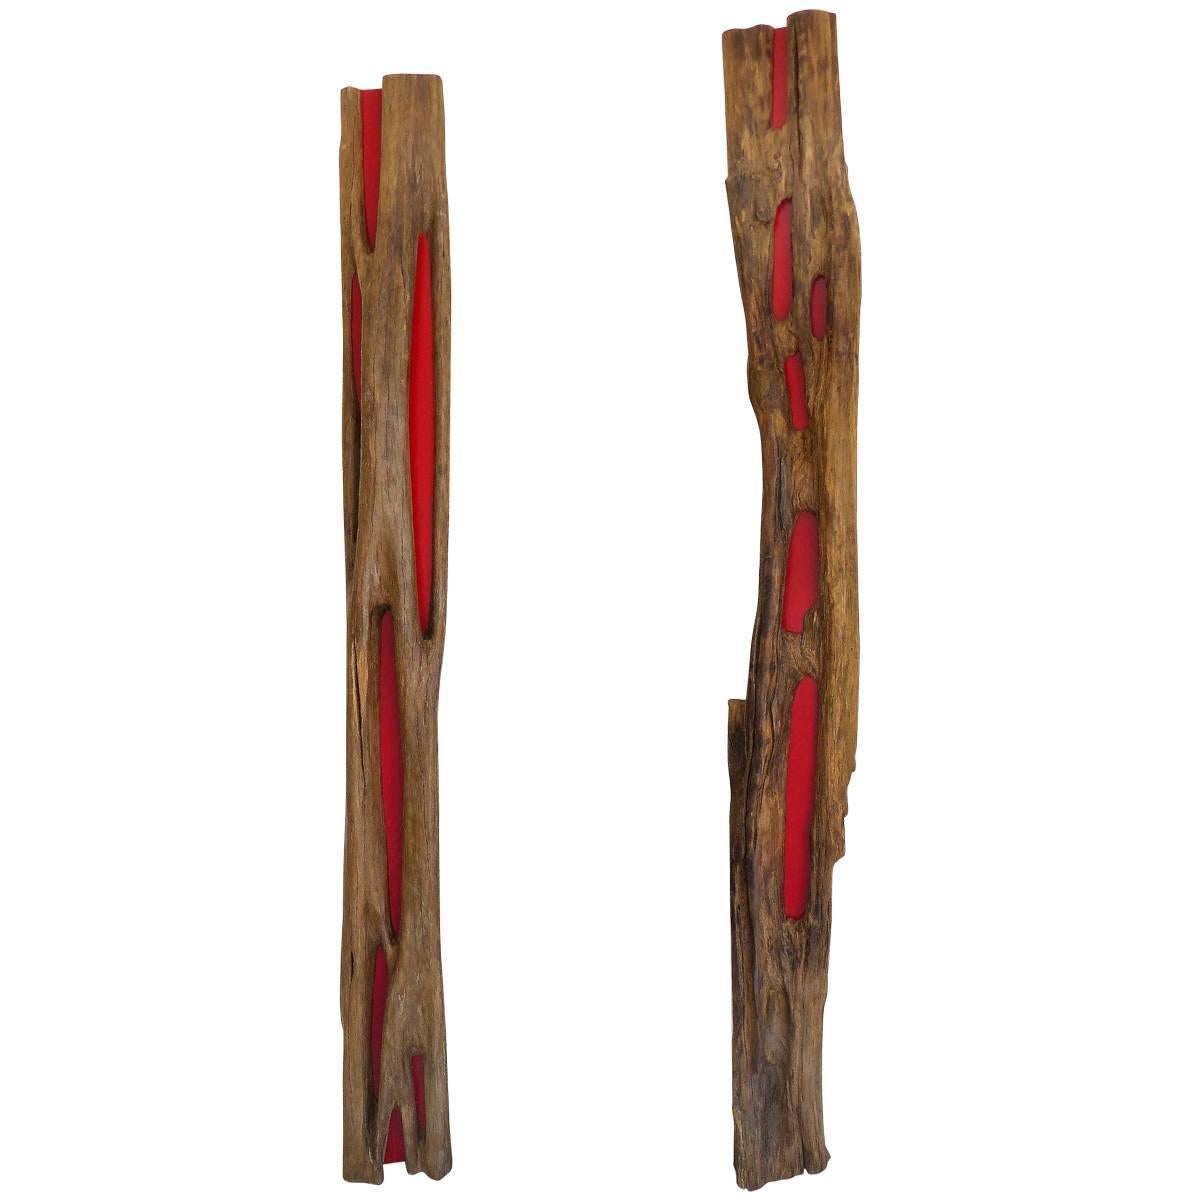 Pair of Reclaimed Wood Log Sculptures by Valeria Totti